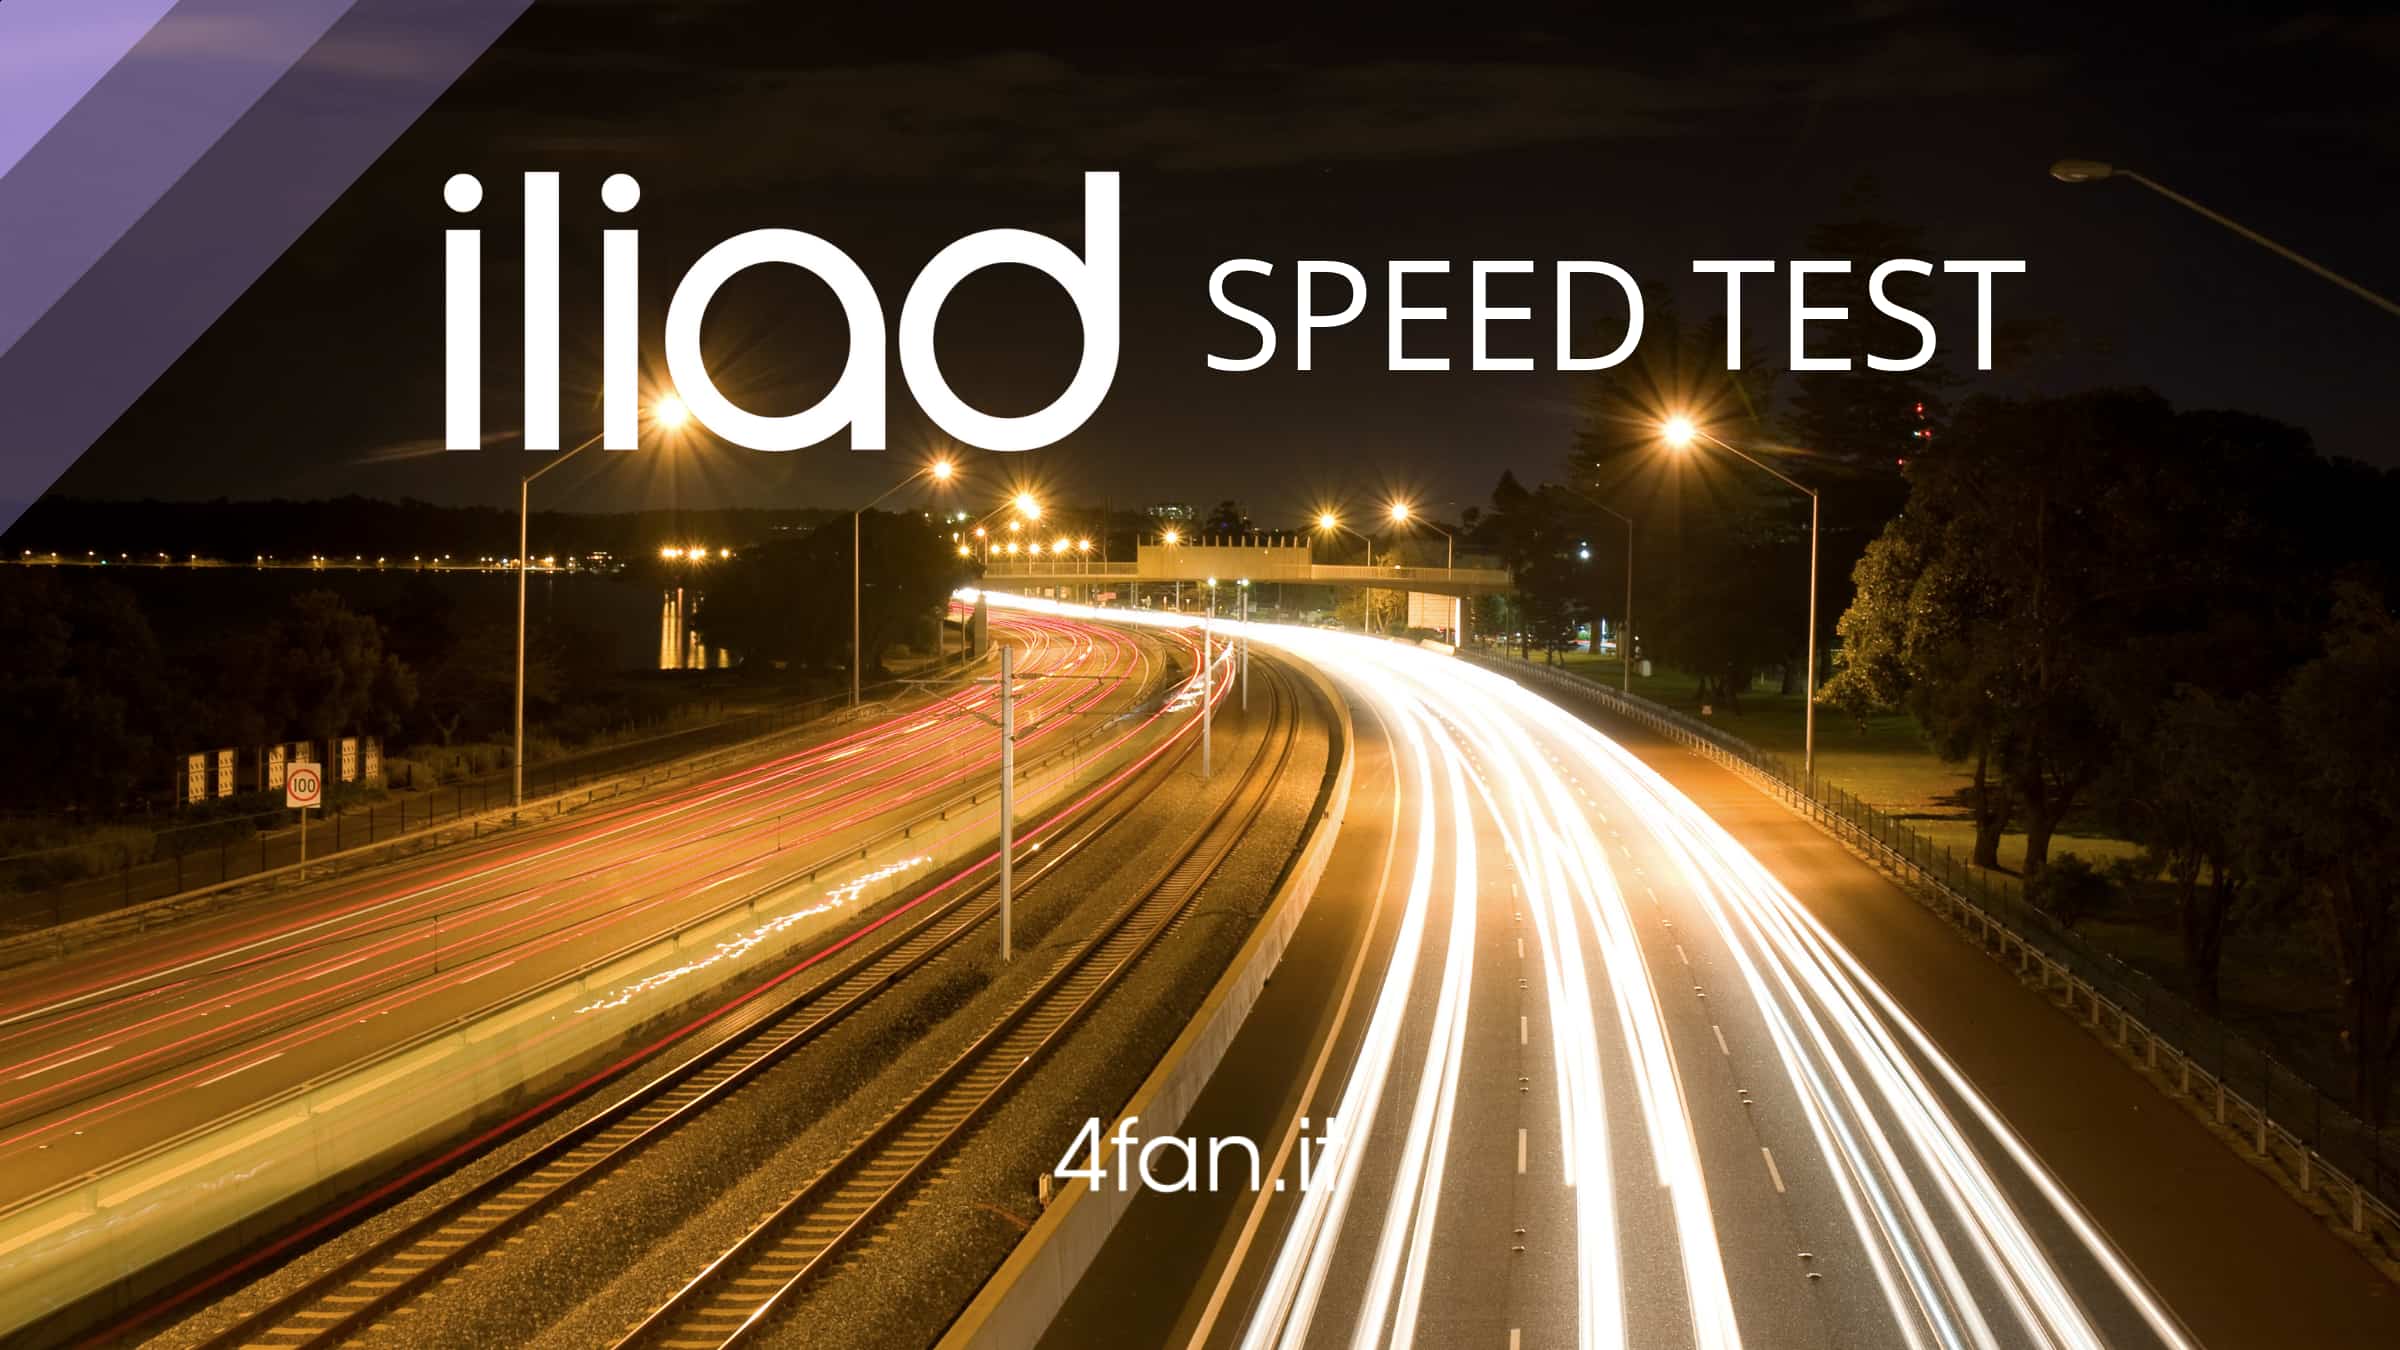 Iliad Speed Test